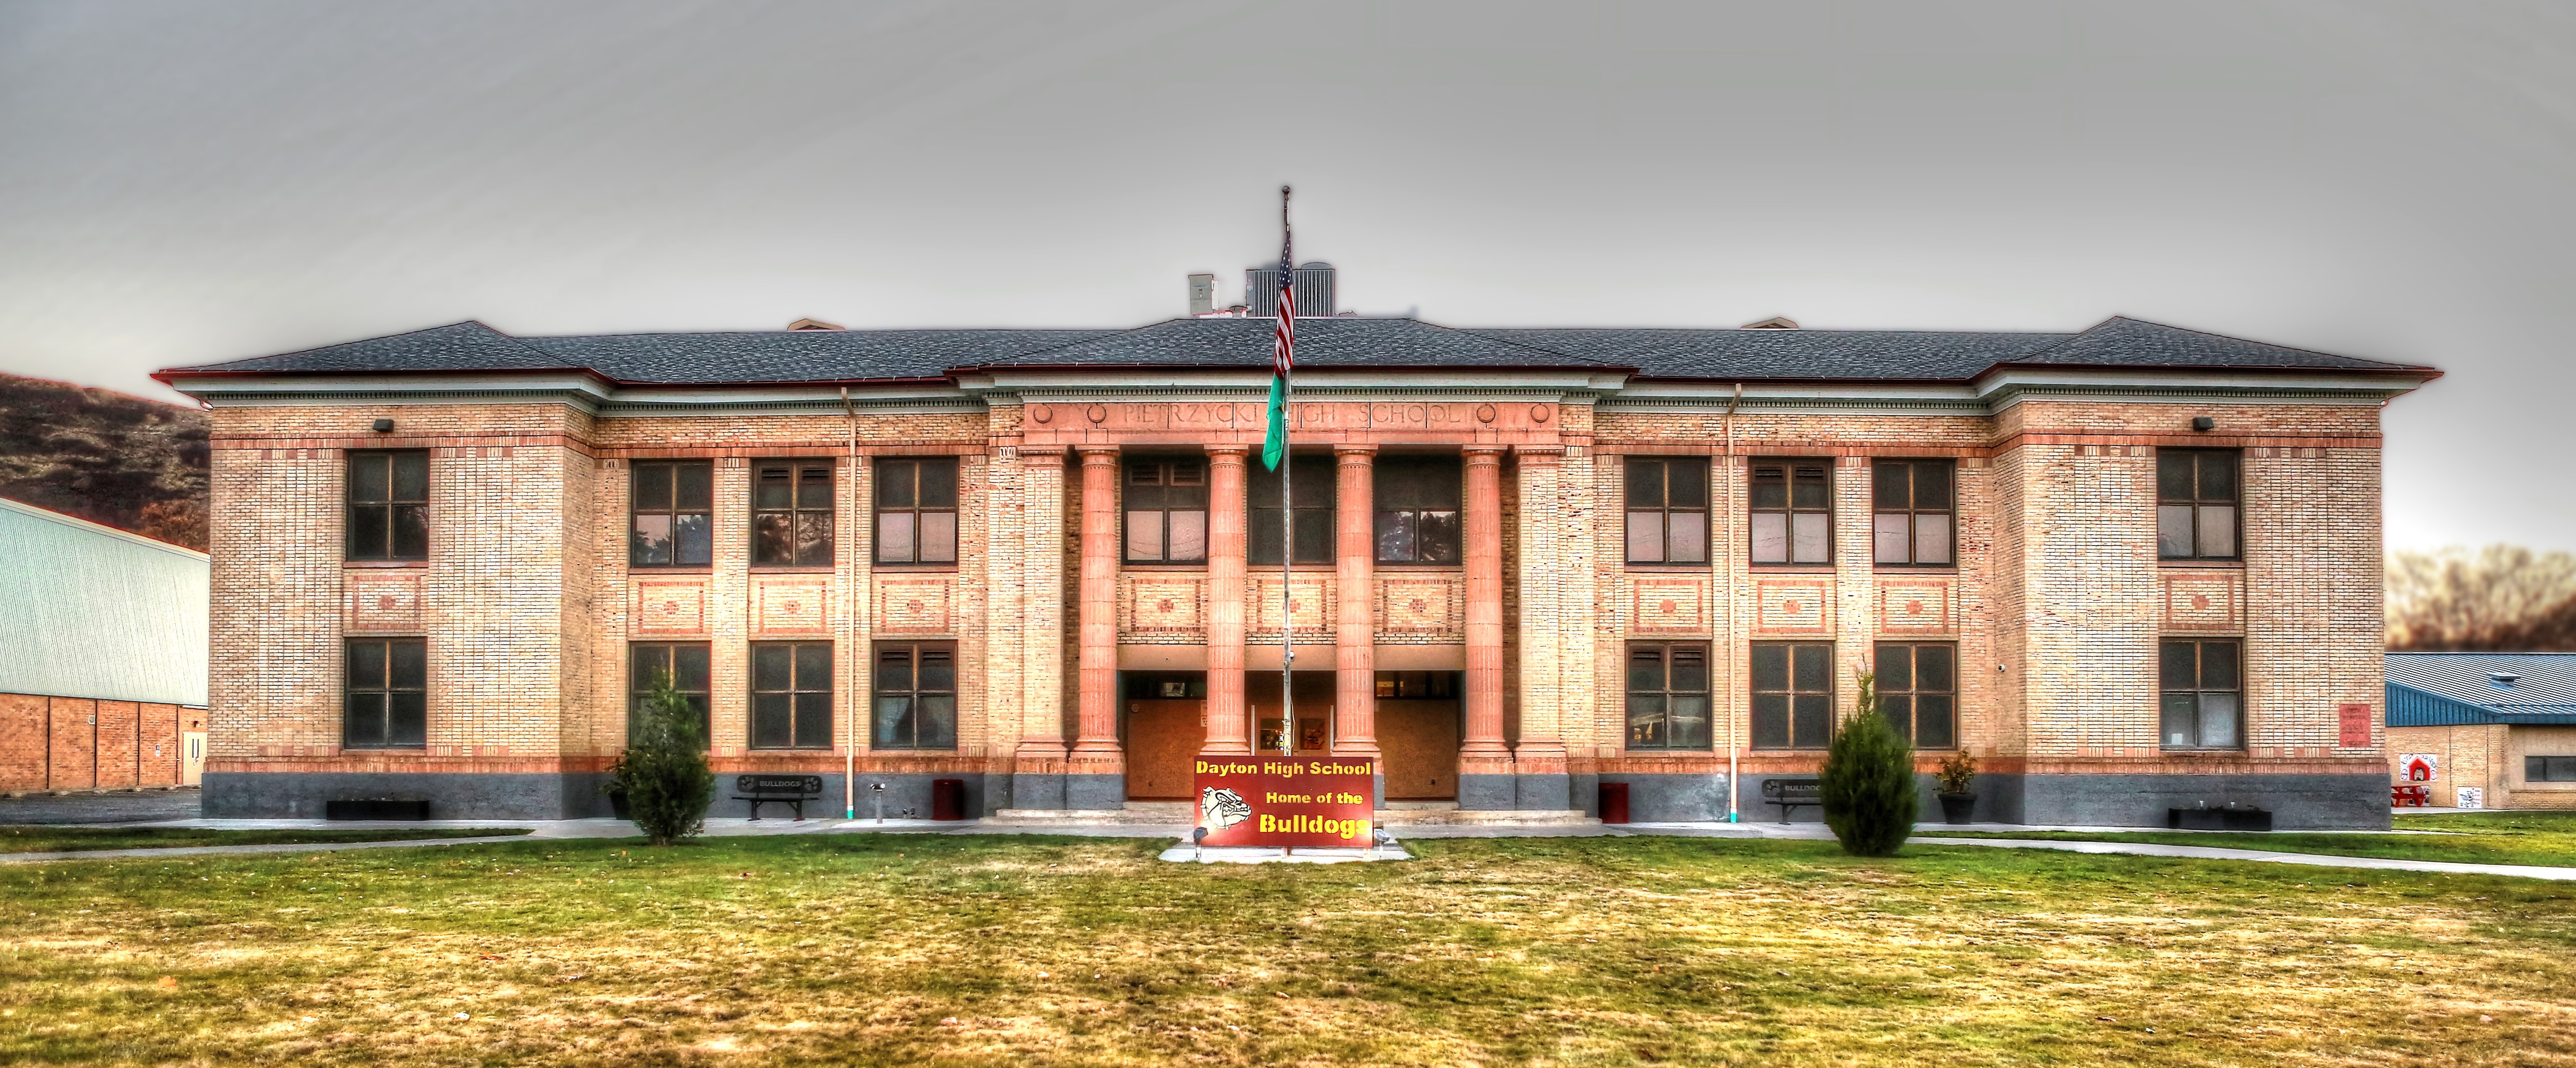 High School campus